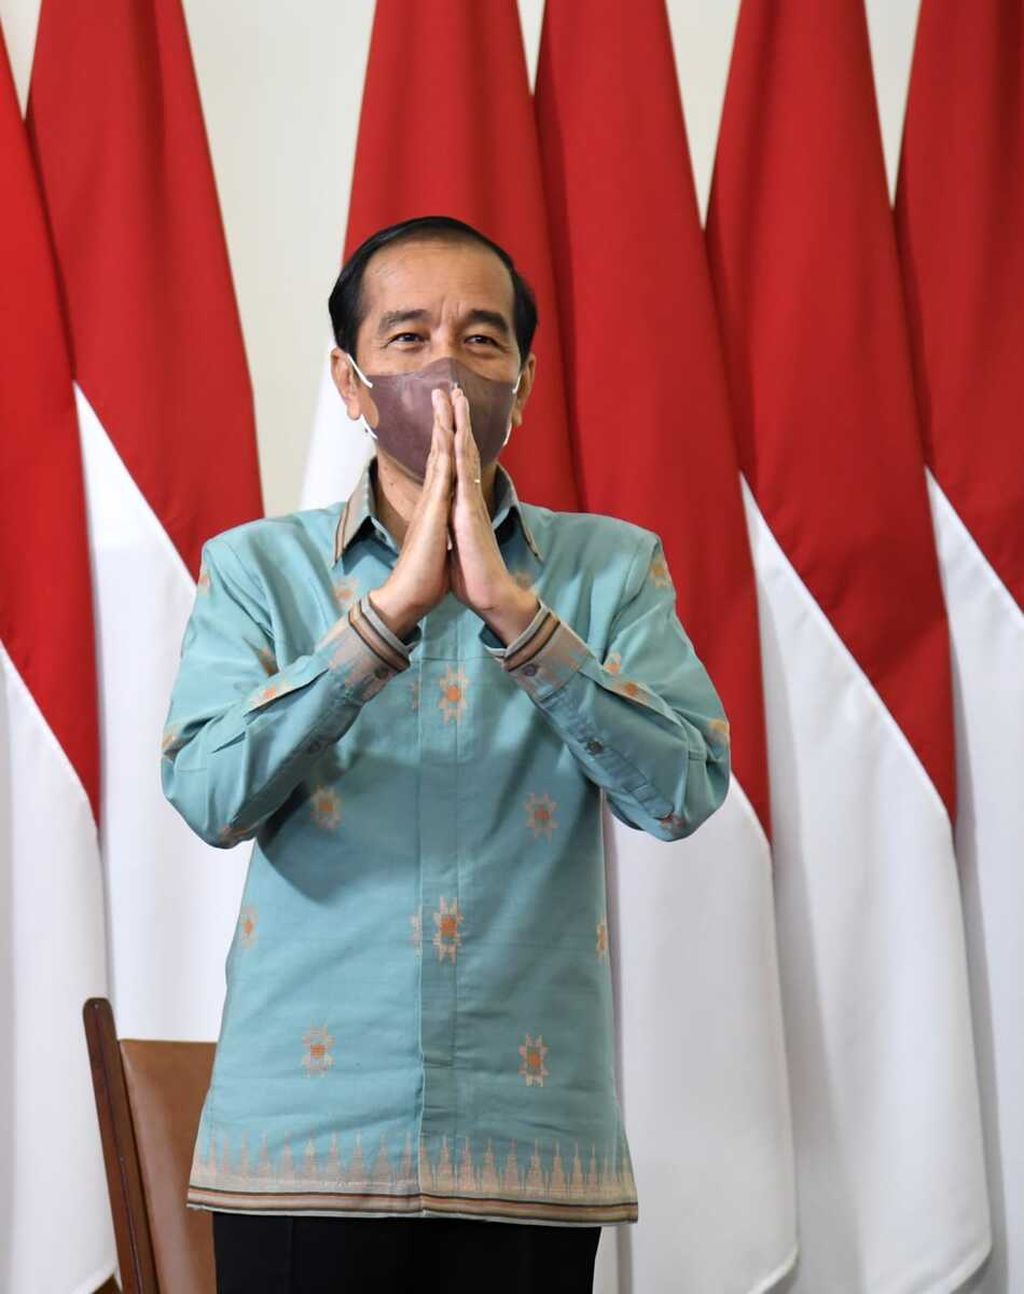 Presiden Joko Widodo menghadiri acara puncak peringatan Hari Pers Nasional Tahun 2022 secara virtual dari Istana Kepresidenan Bogor, Jawa Barat, 9 Februari 2022.